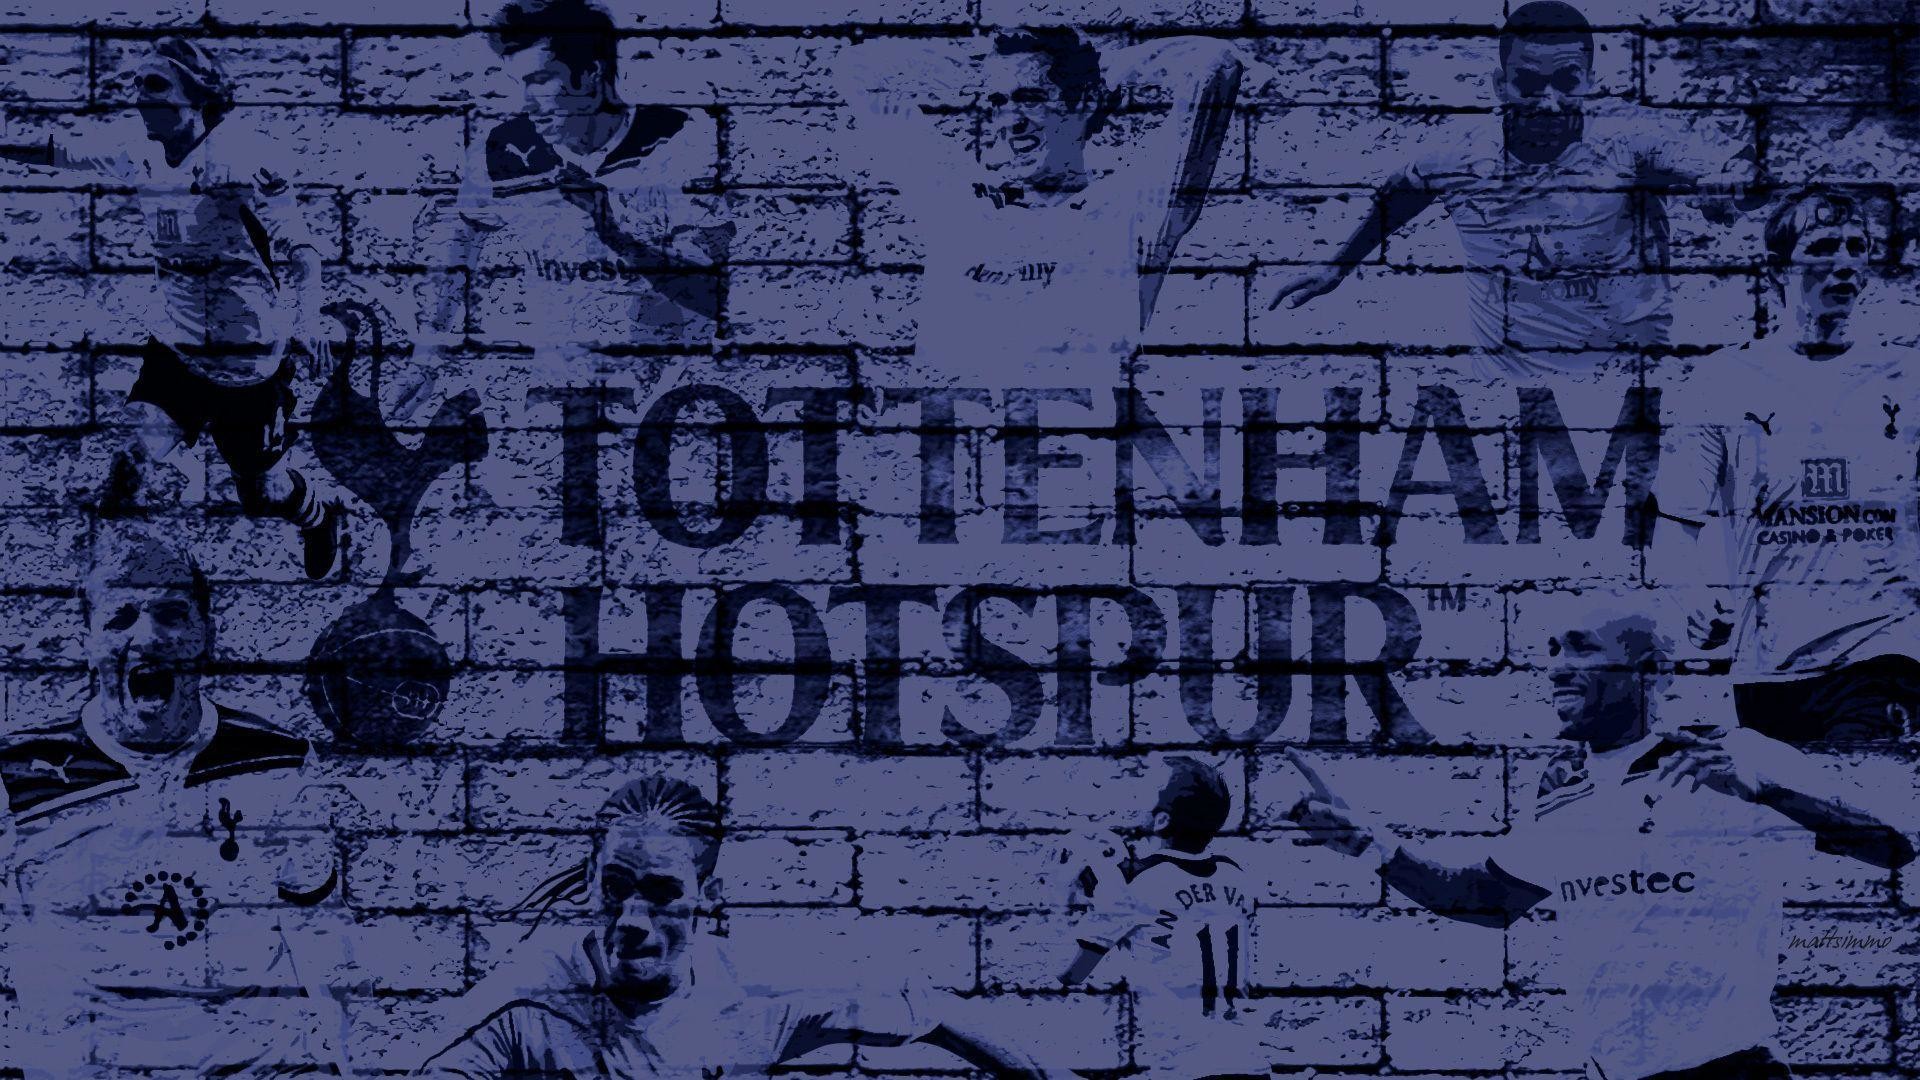 Tottenham Hotspur Hd Wallpaper